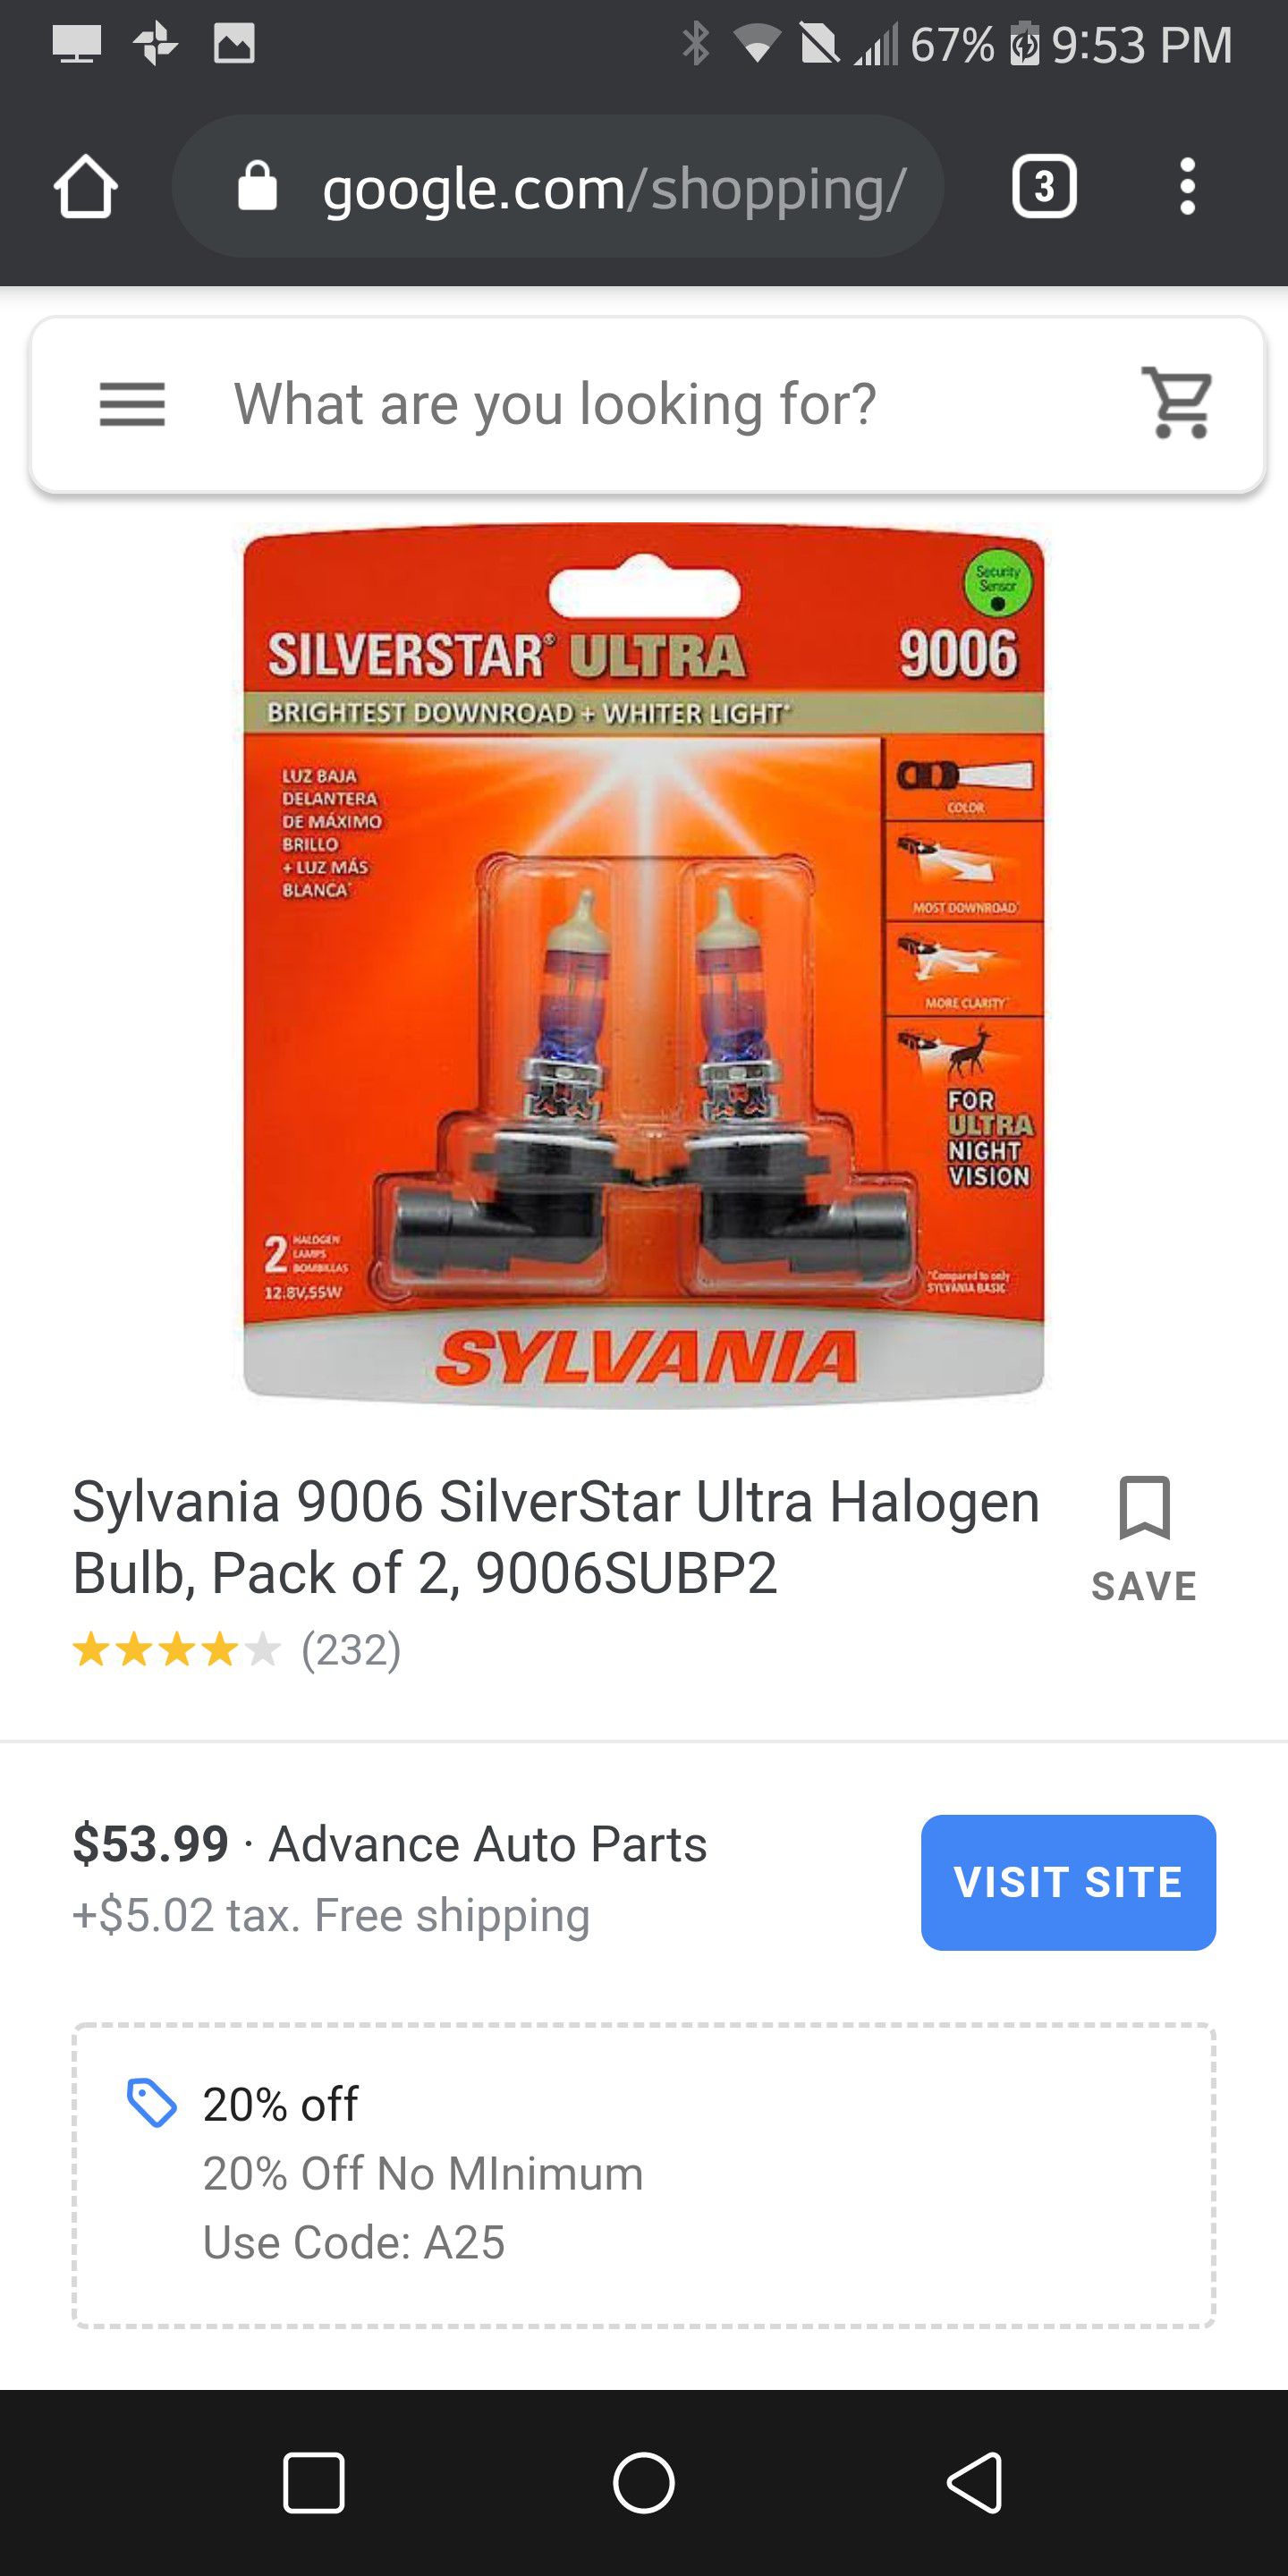 Sylvania 9006 silverstar ultra headlight bulbs